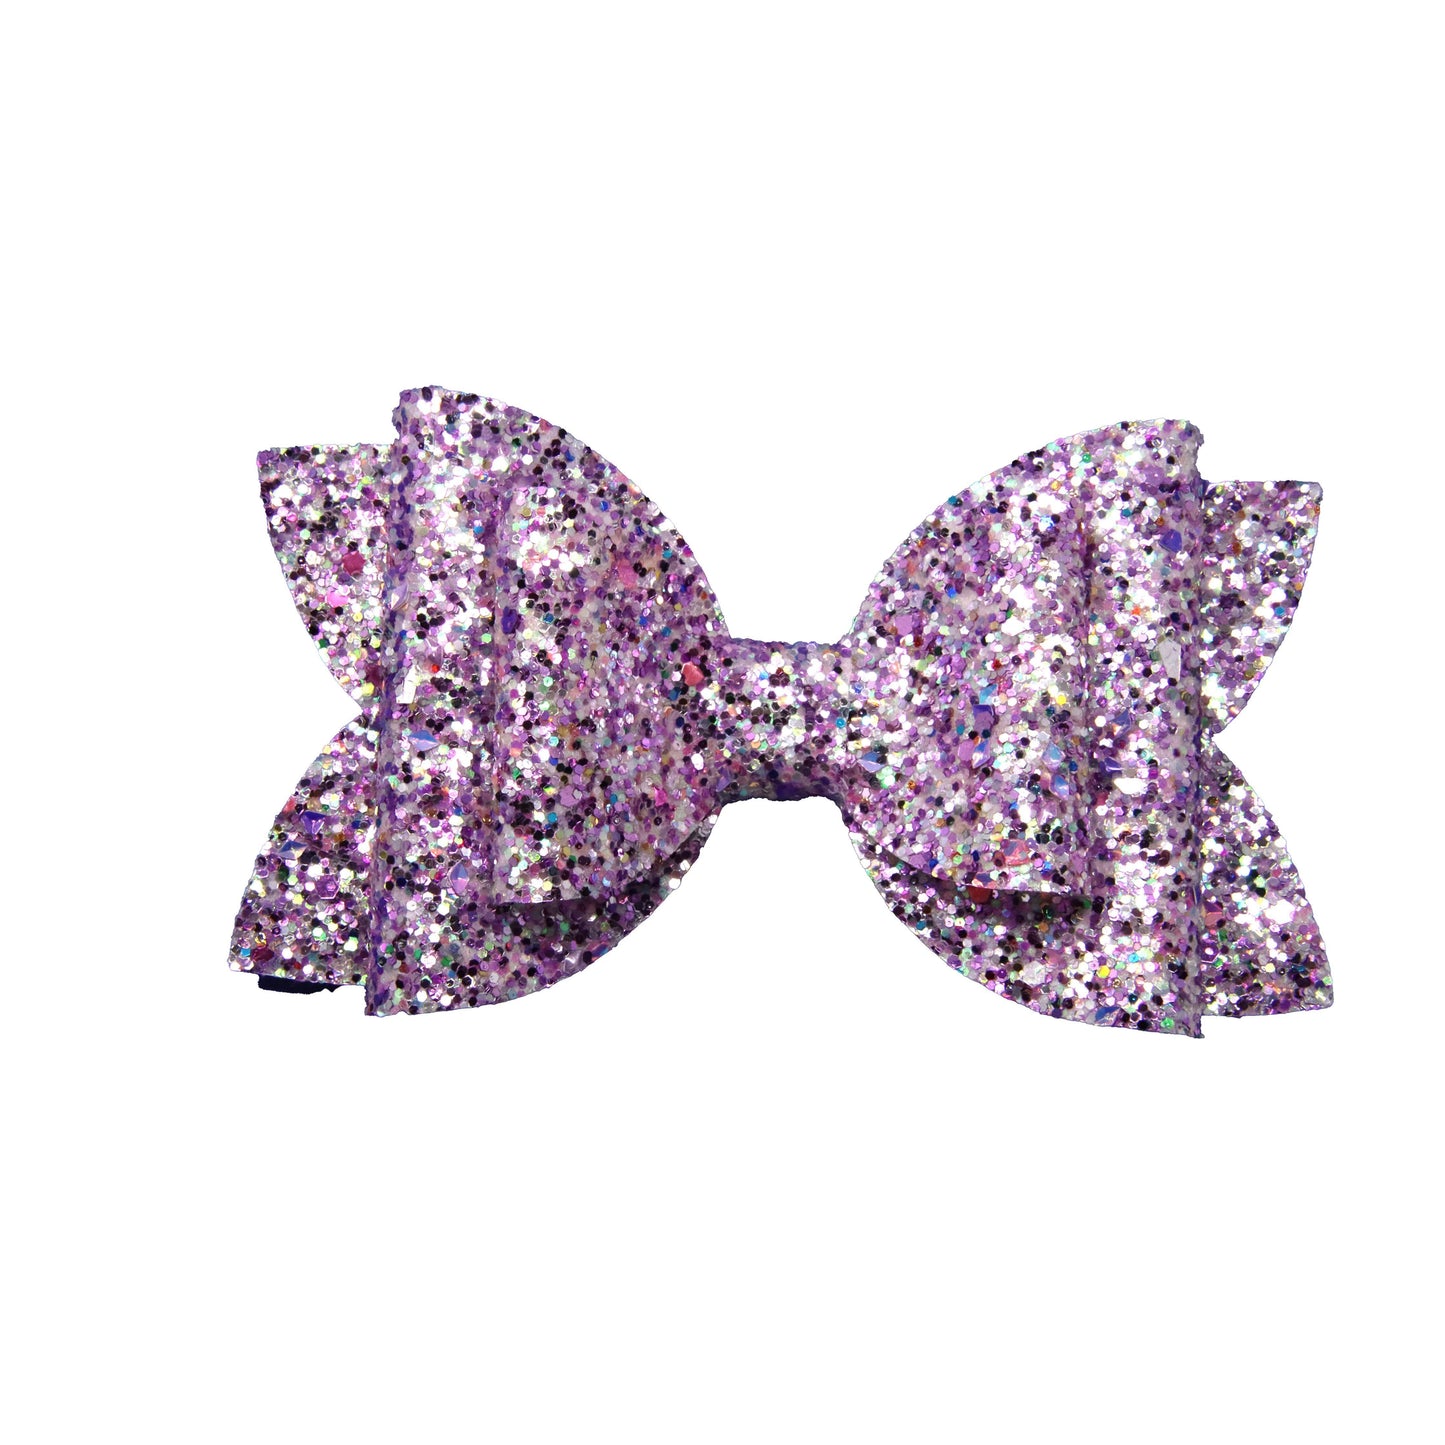 5 inch Lavender Fields Glitter Double Diva Bow